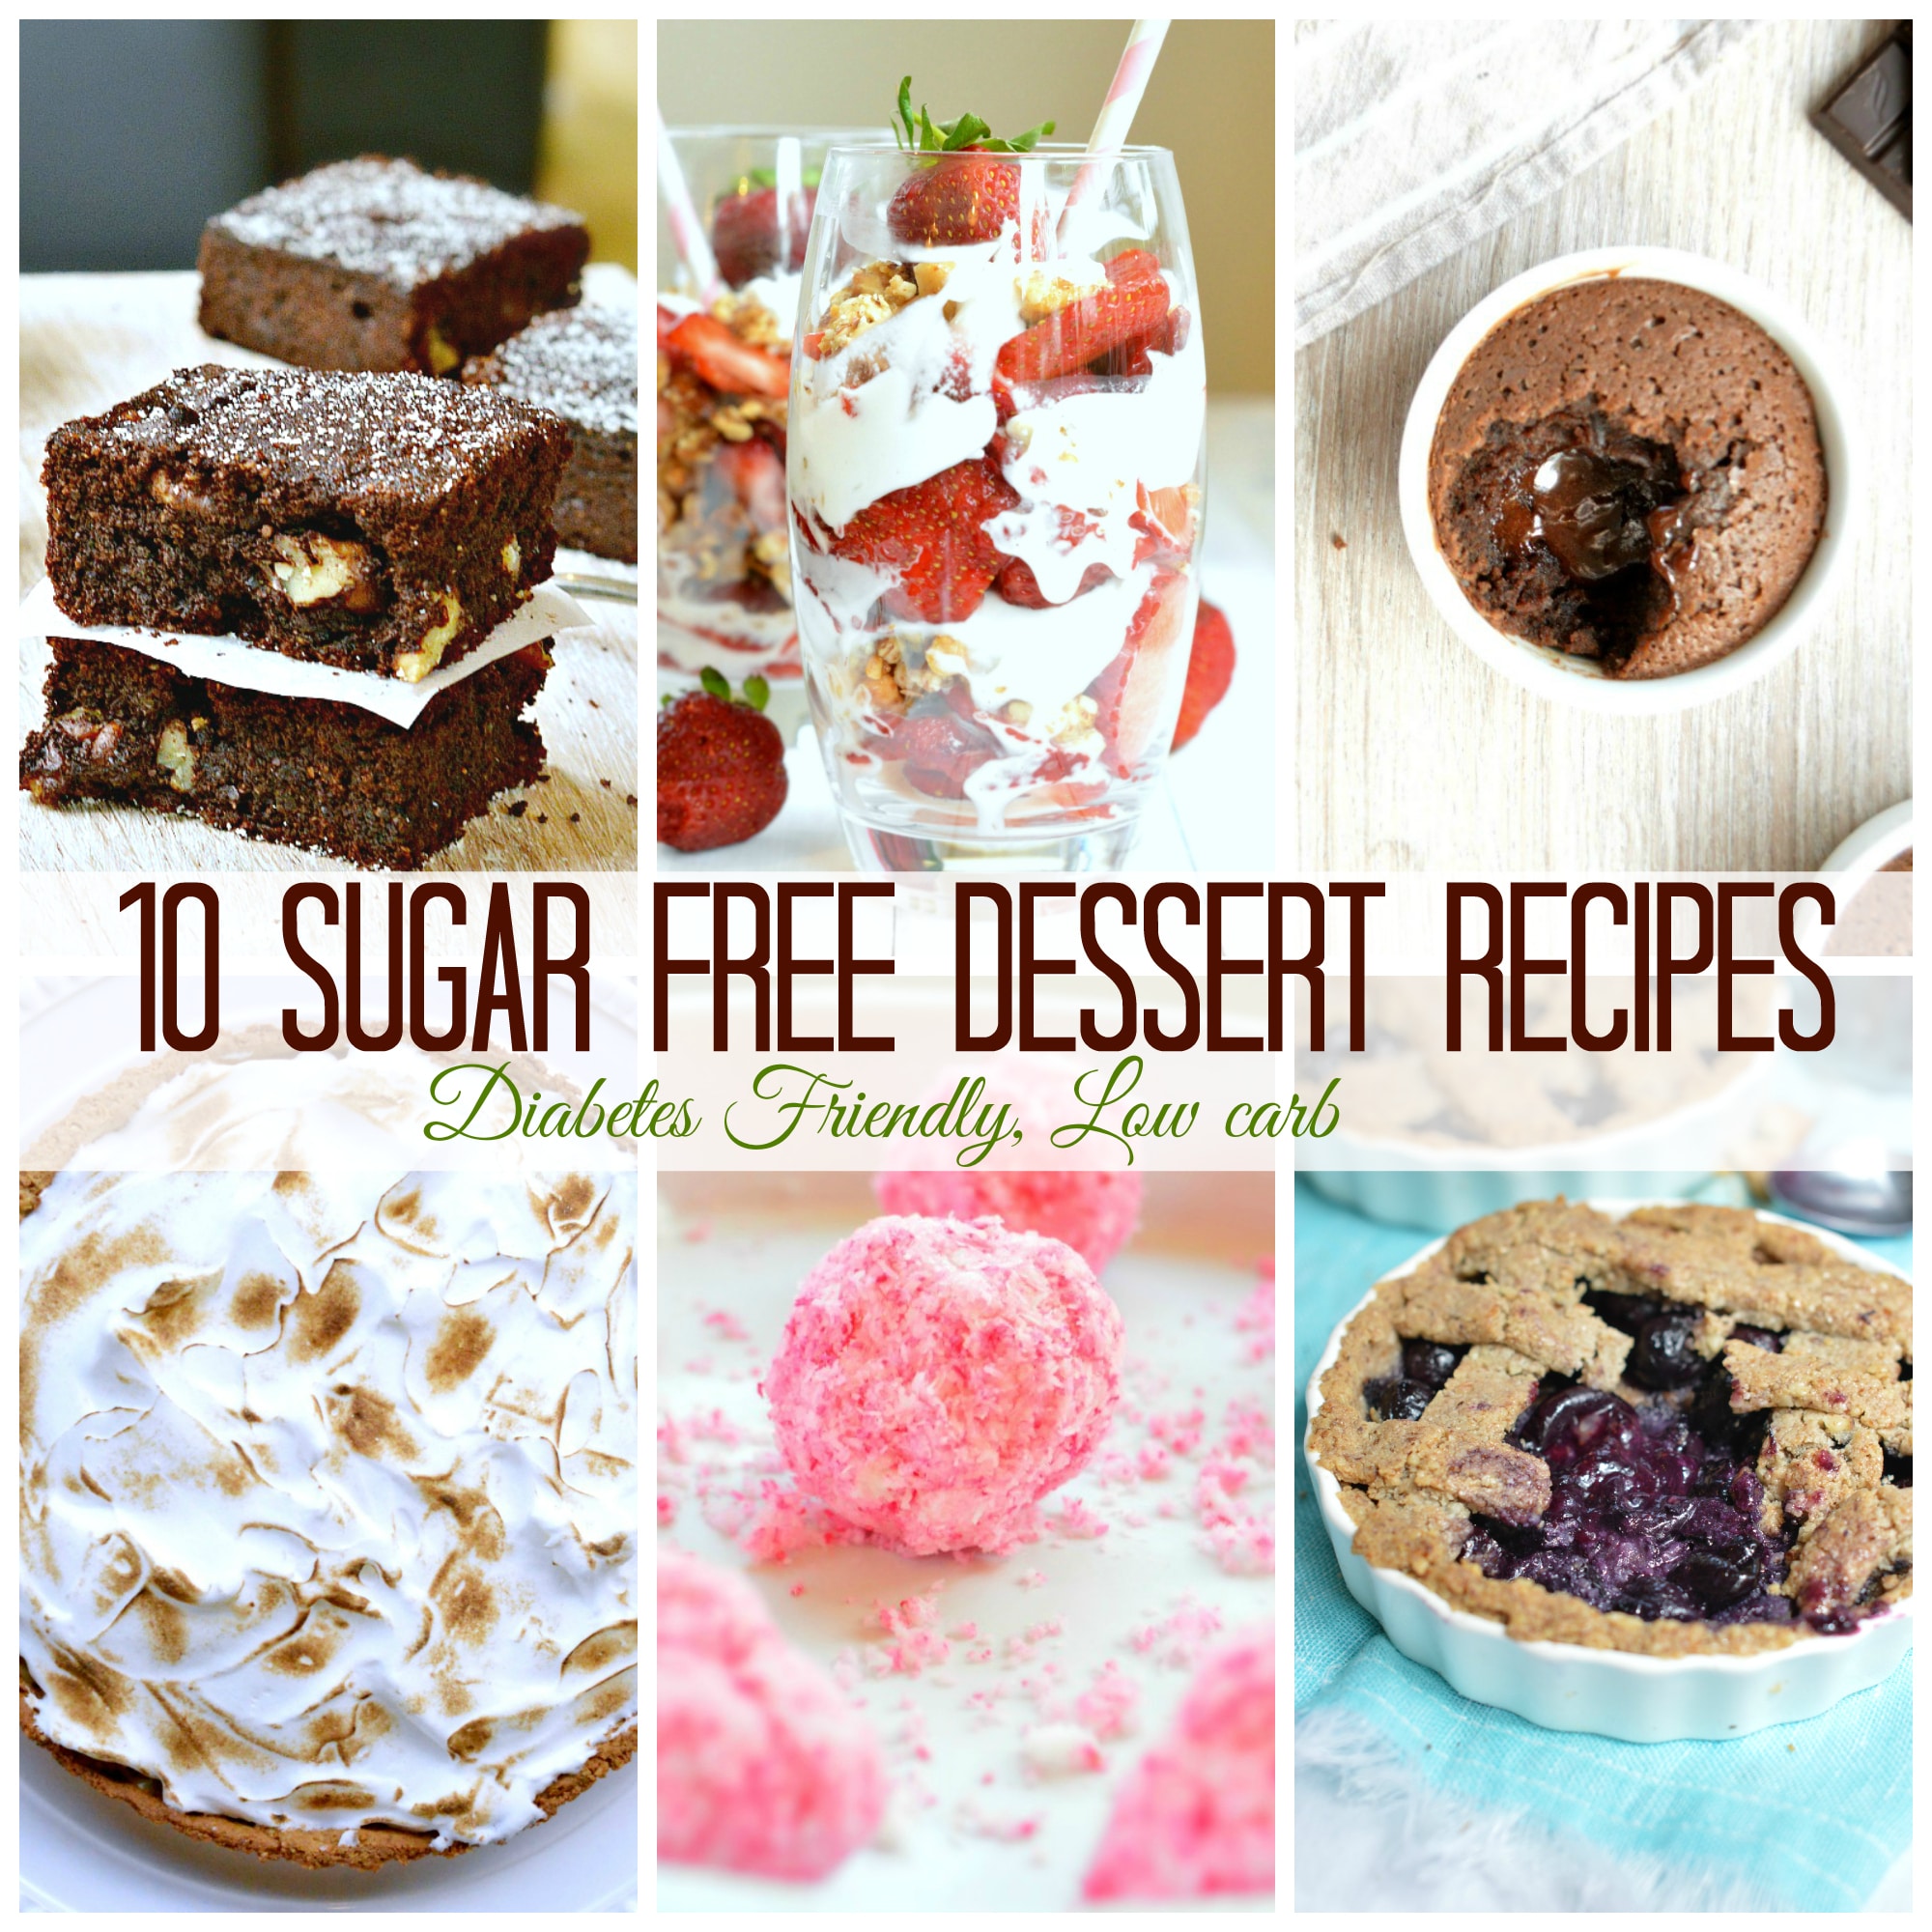 10 Sugar Free Dessert for diabetics